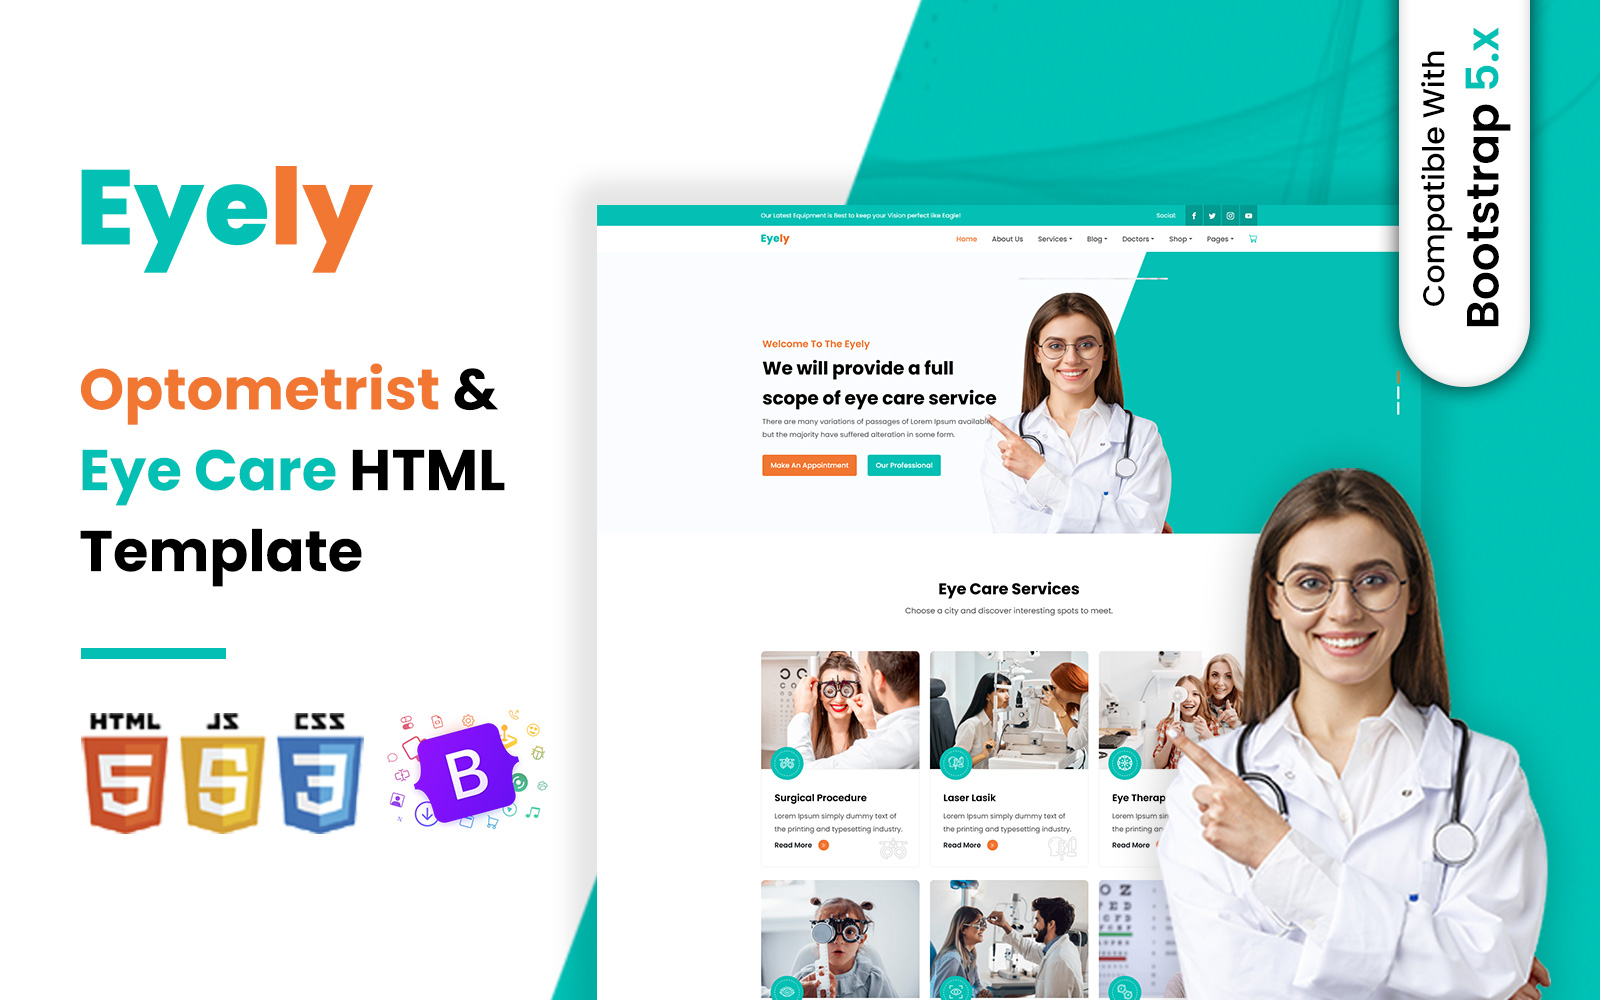 Eyely | Optometrist & Eyecare HTML Template